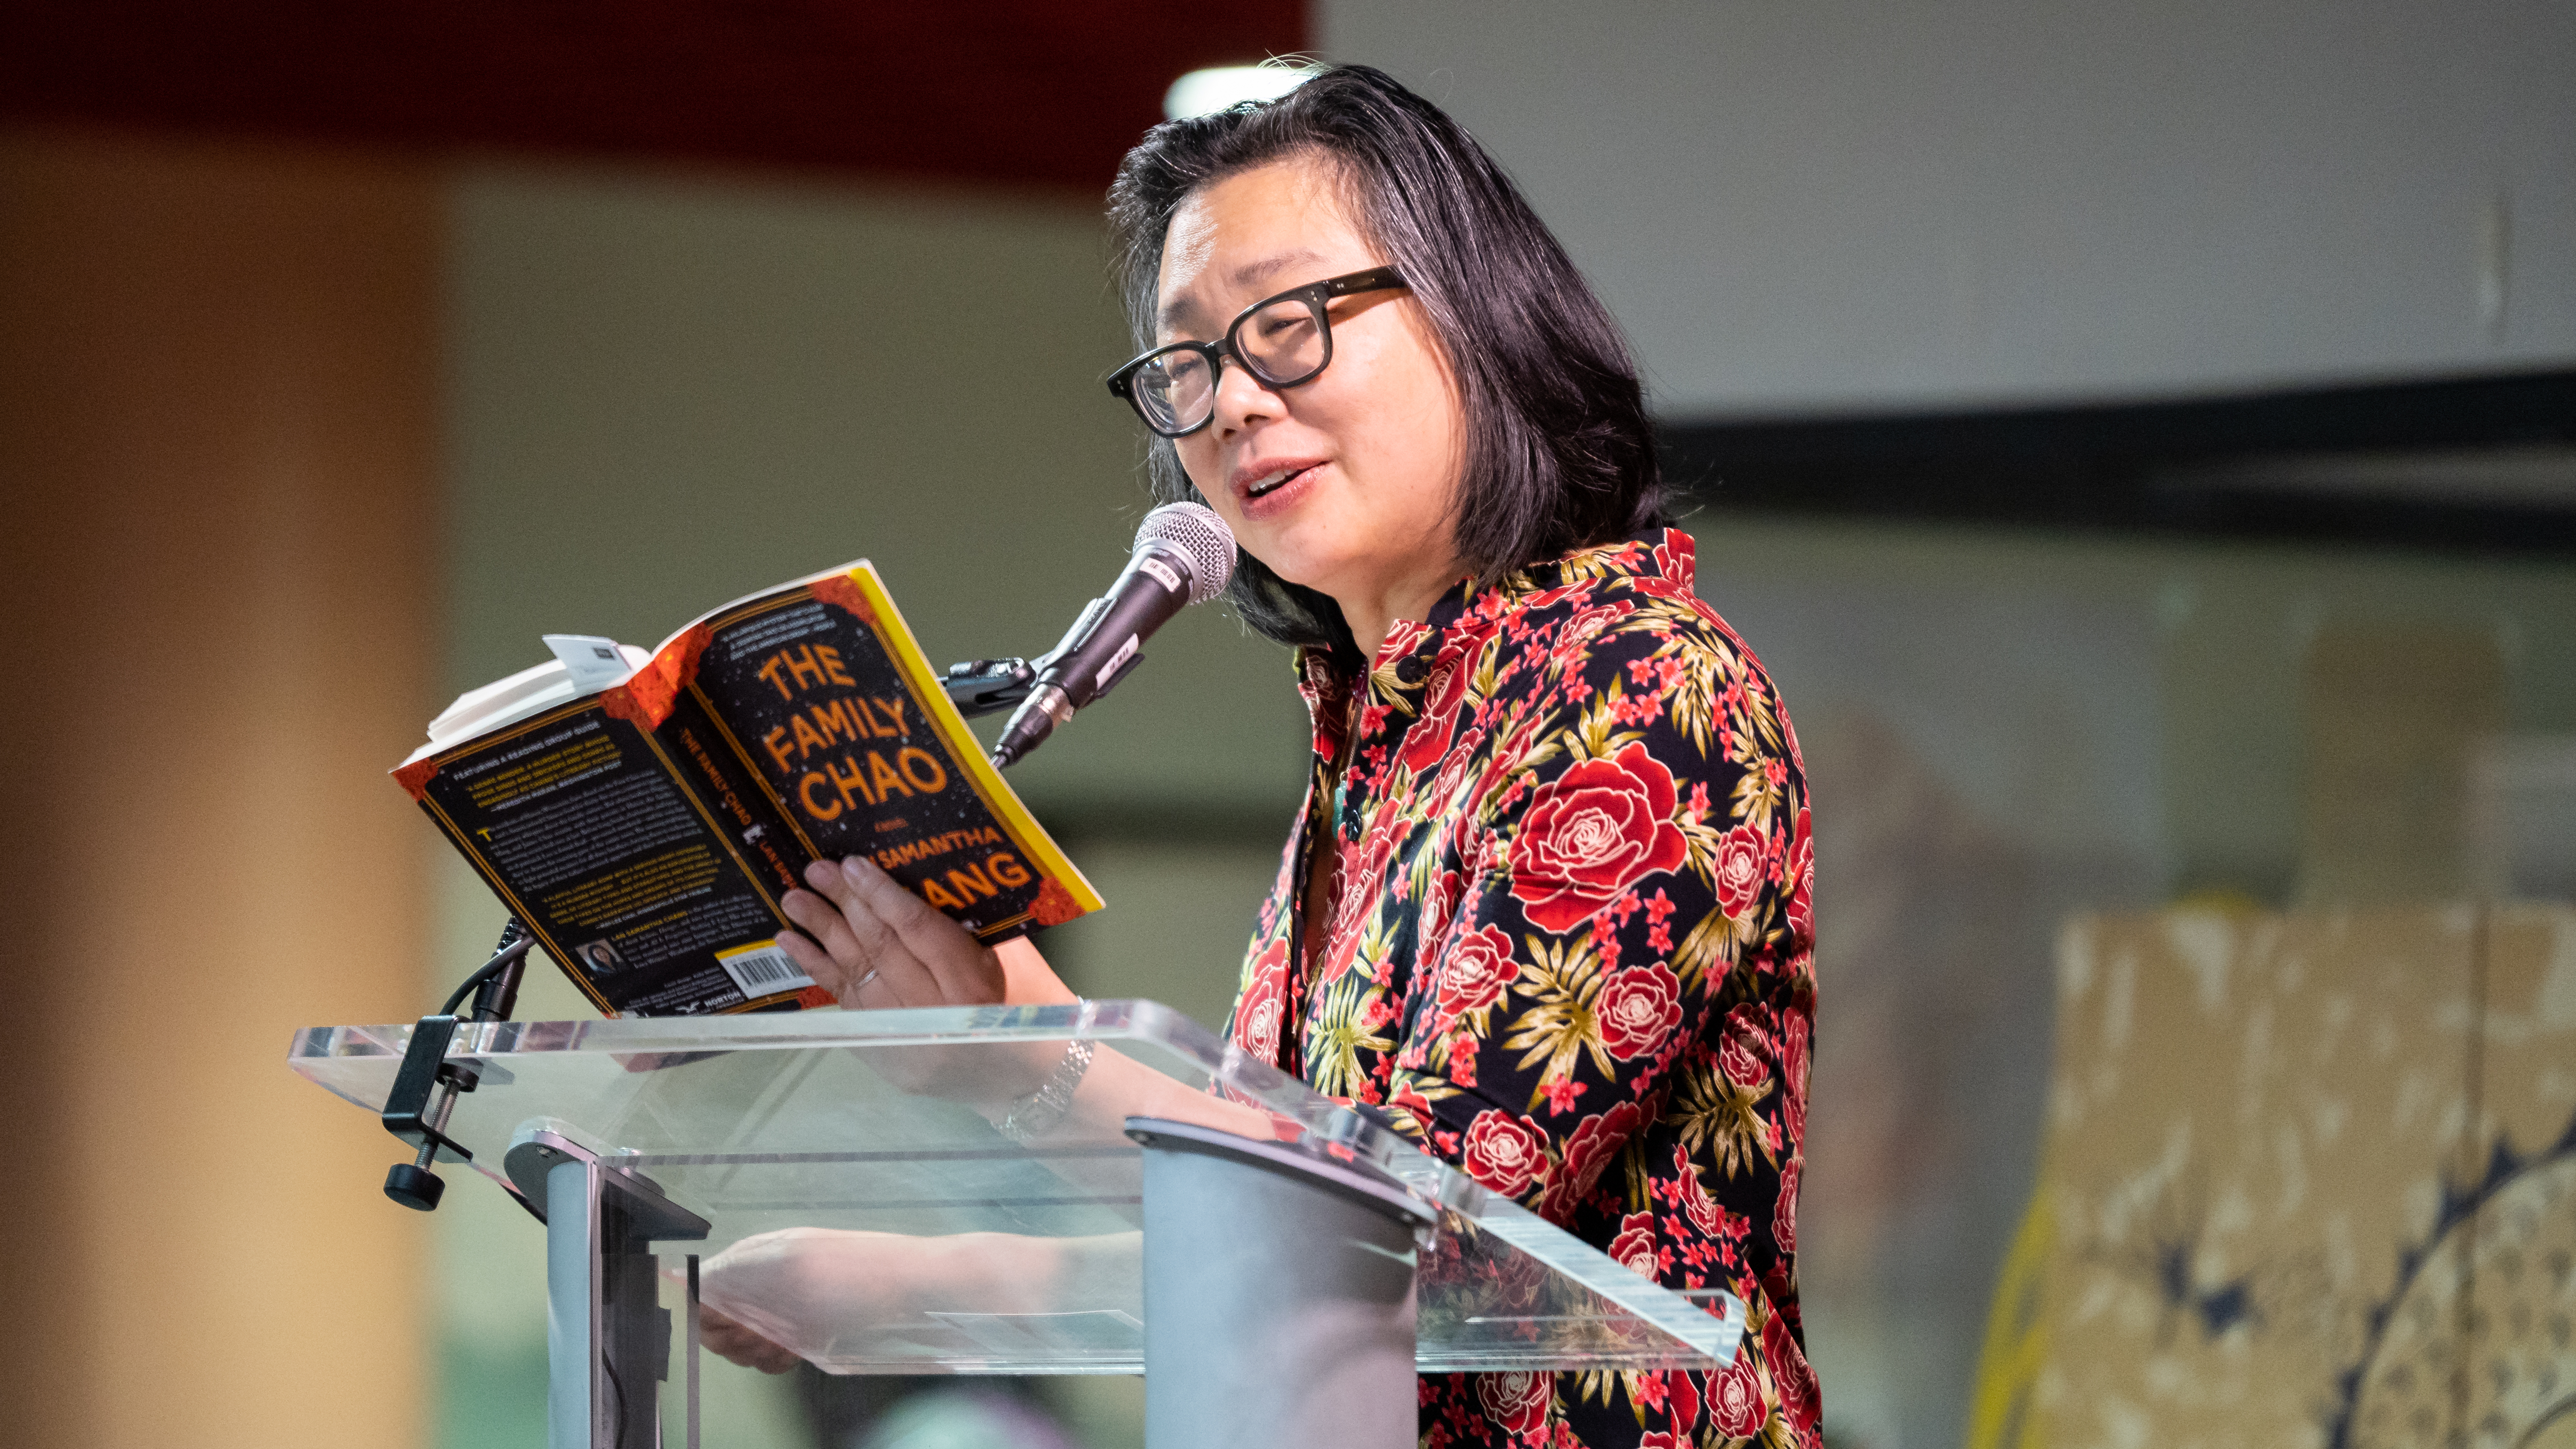 Lan Samantha Chang, author of The Family Chao. Photo credit: Kamron Khan.